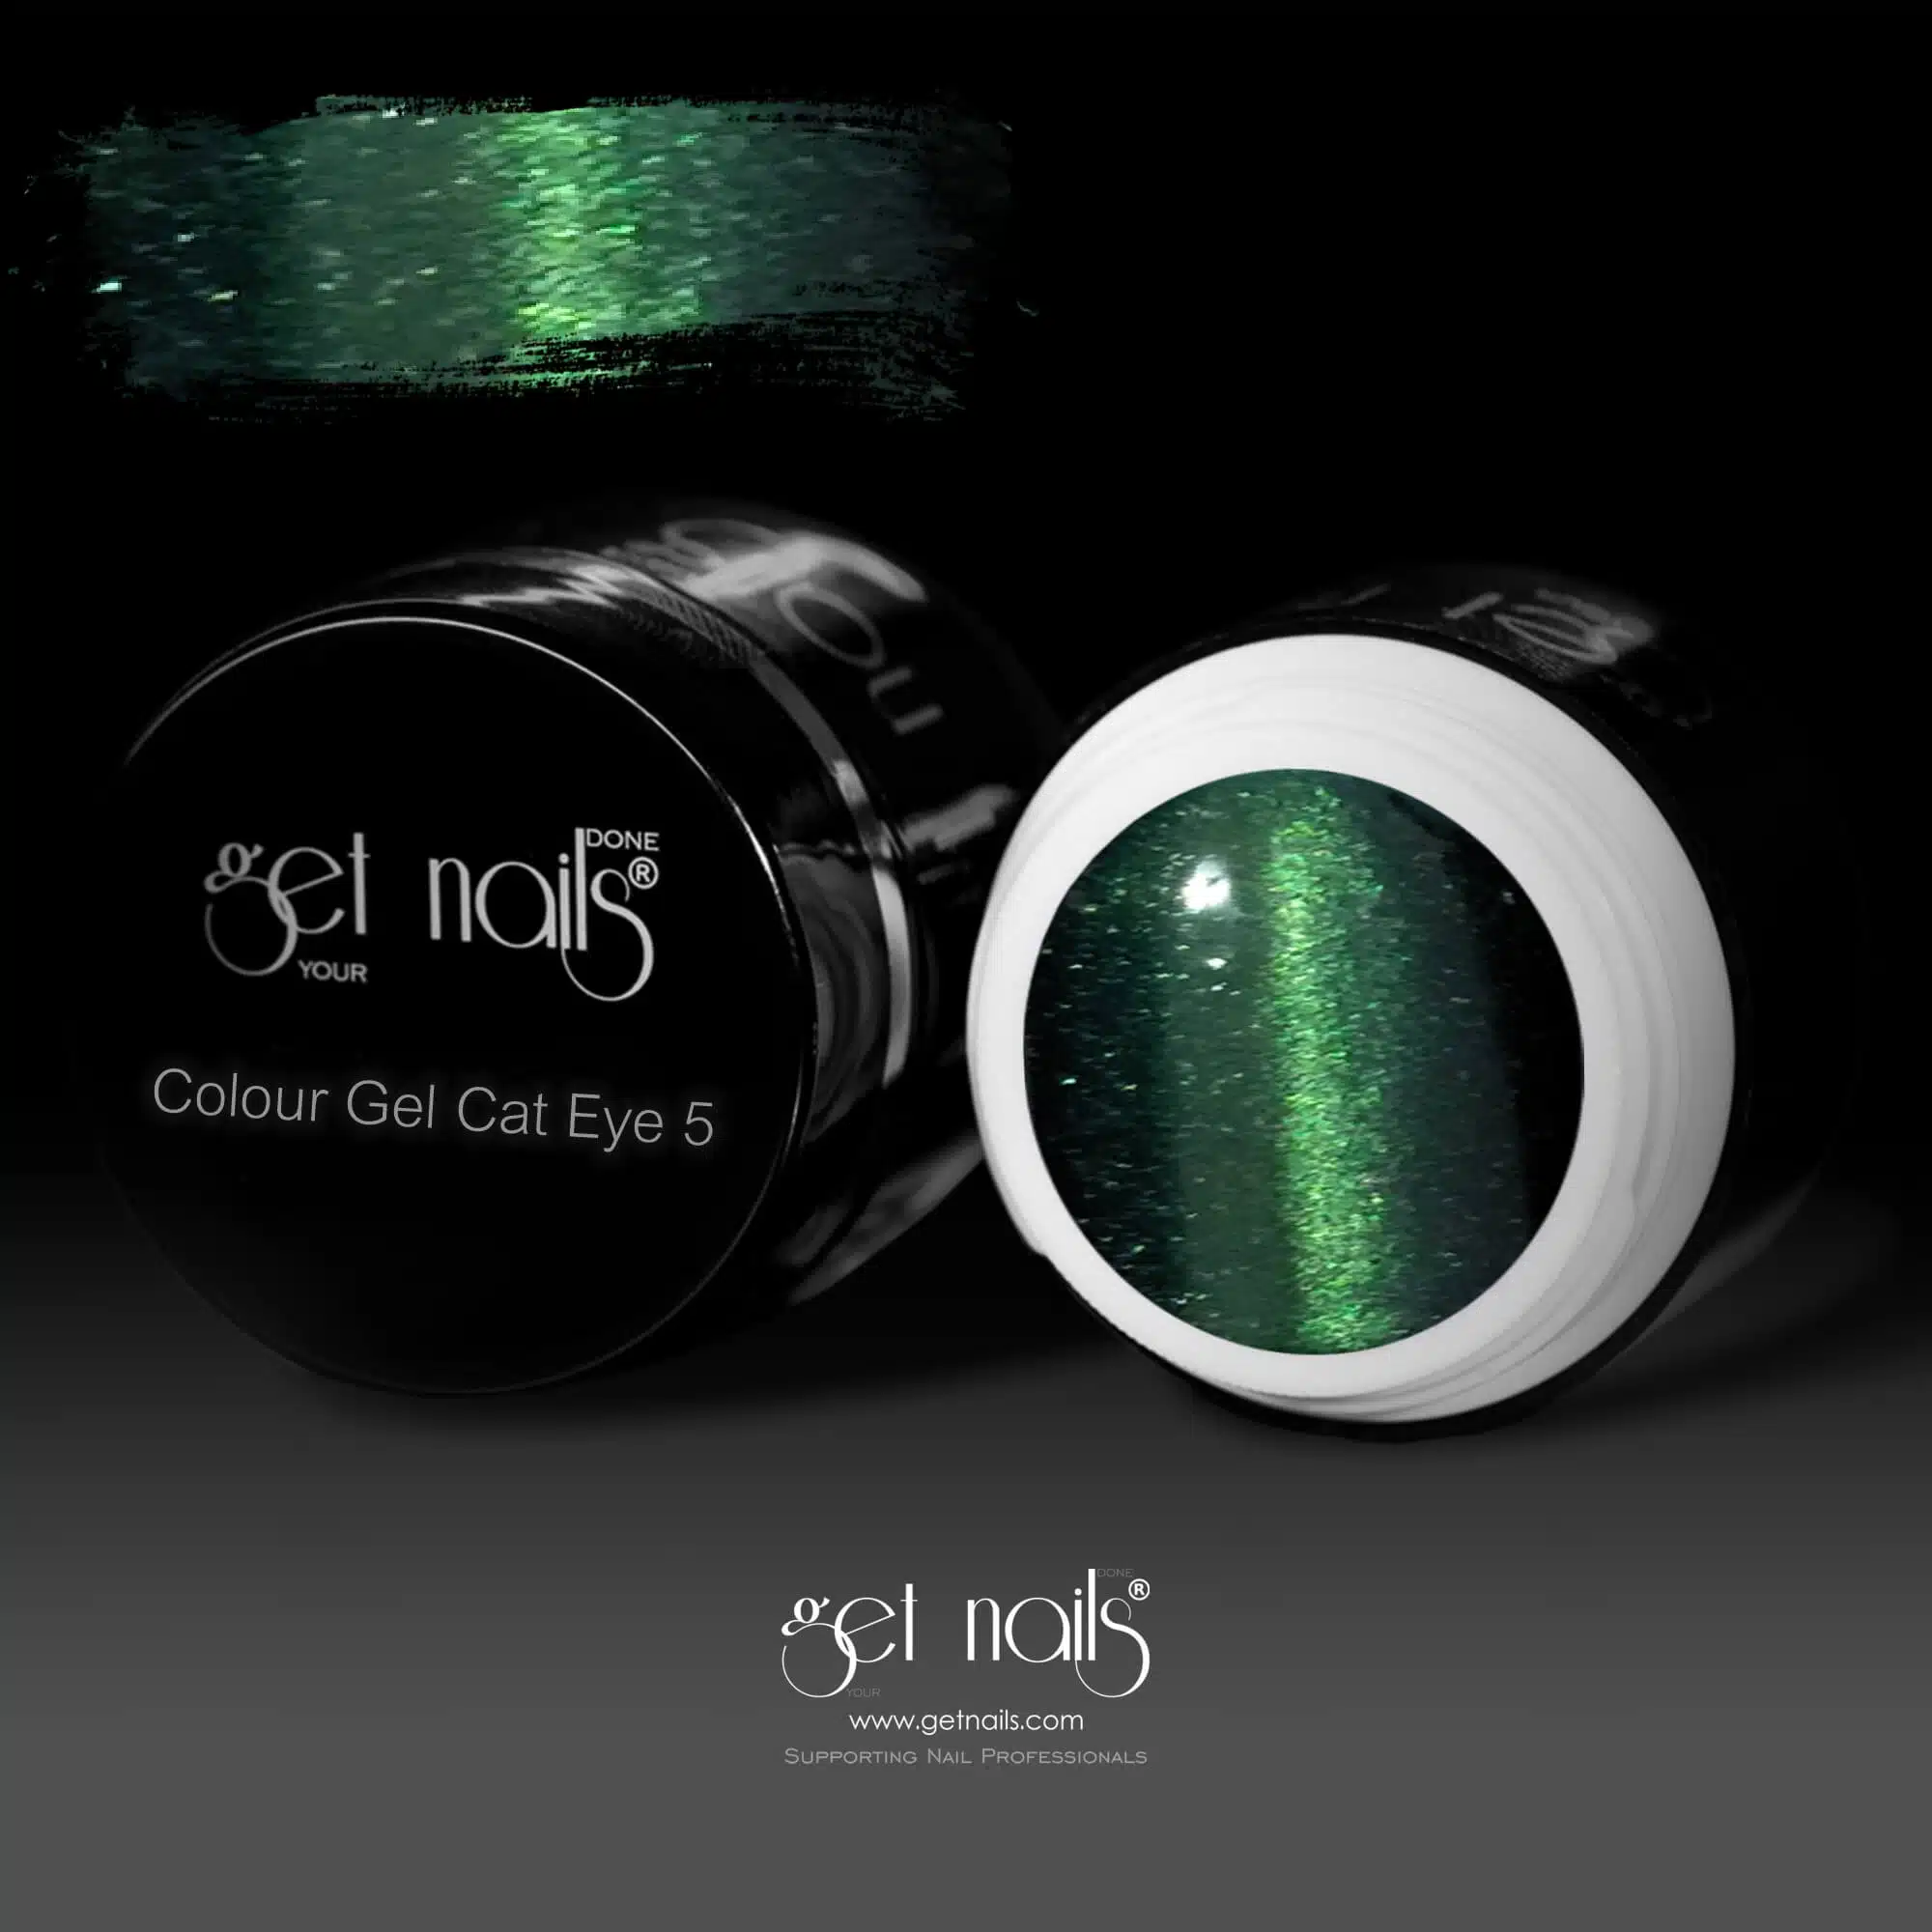 Get Nails Austria – Color Gel Cat Eye 5